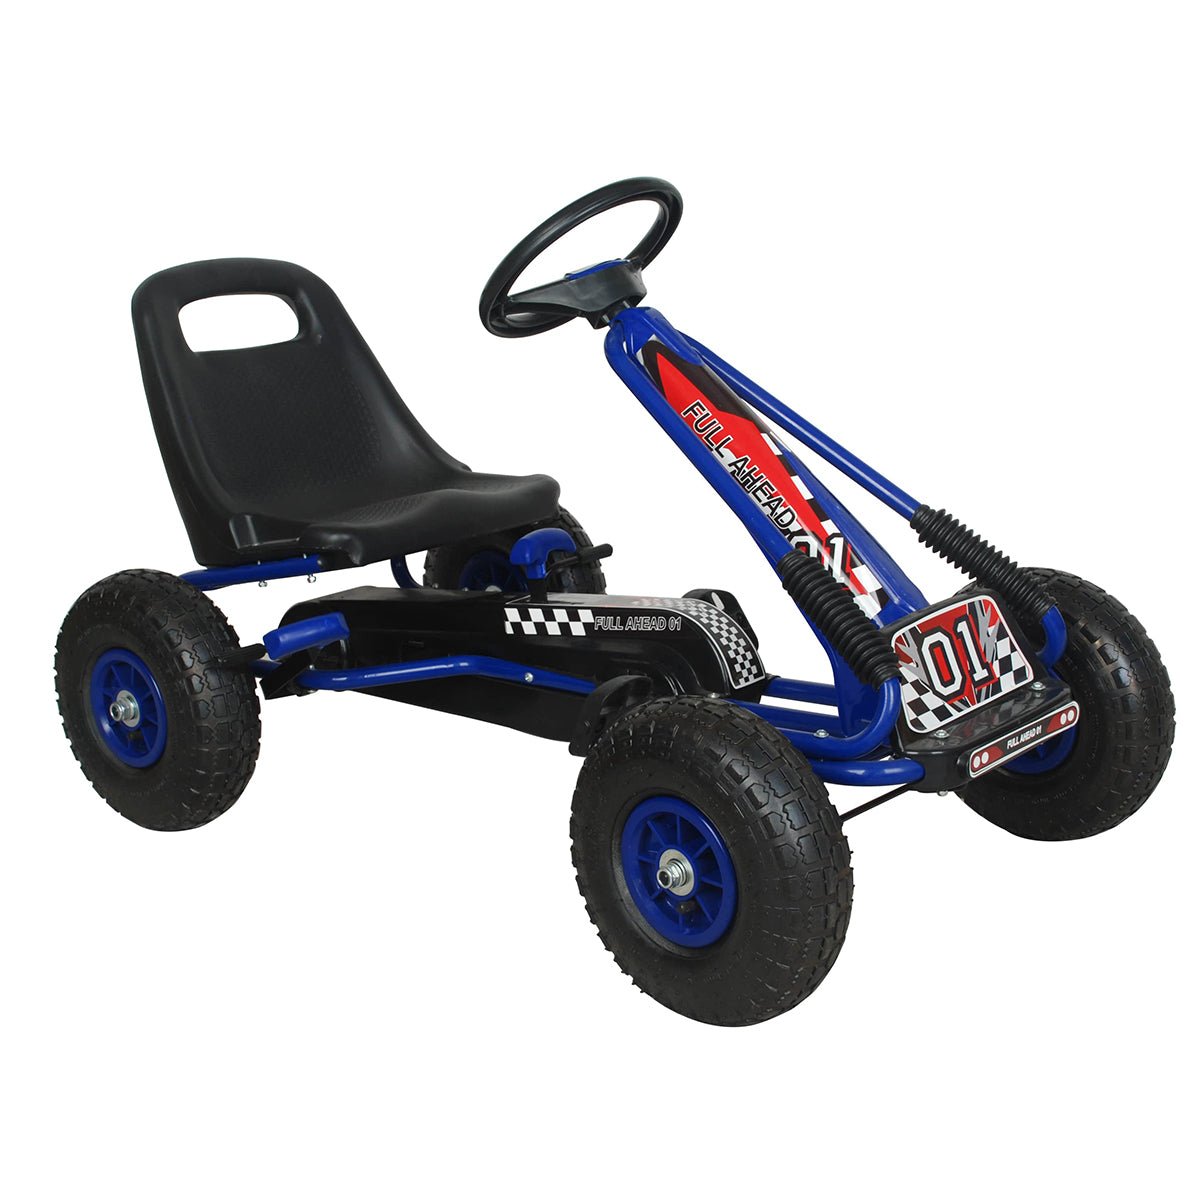 TecTake Go-kart gokart go Kart pedal 2 seater outdoor toy racing